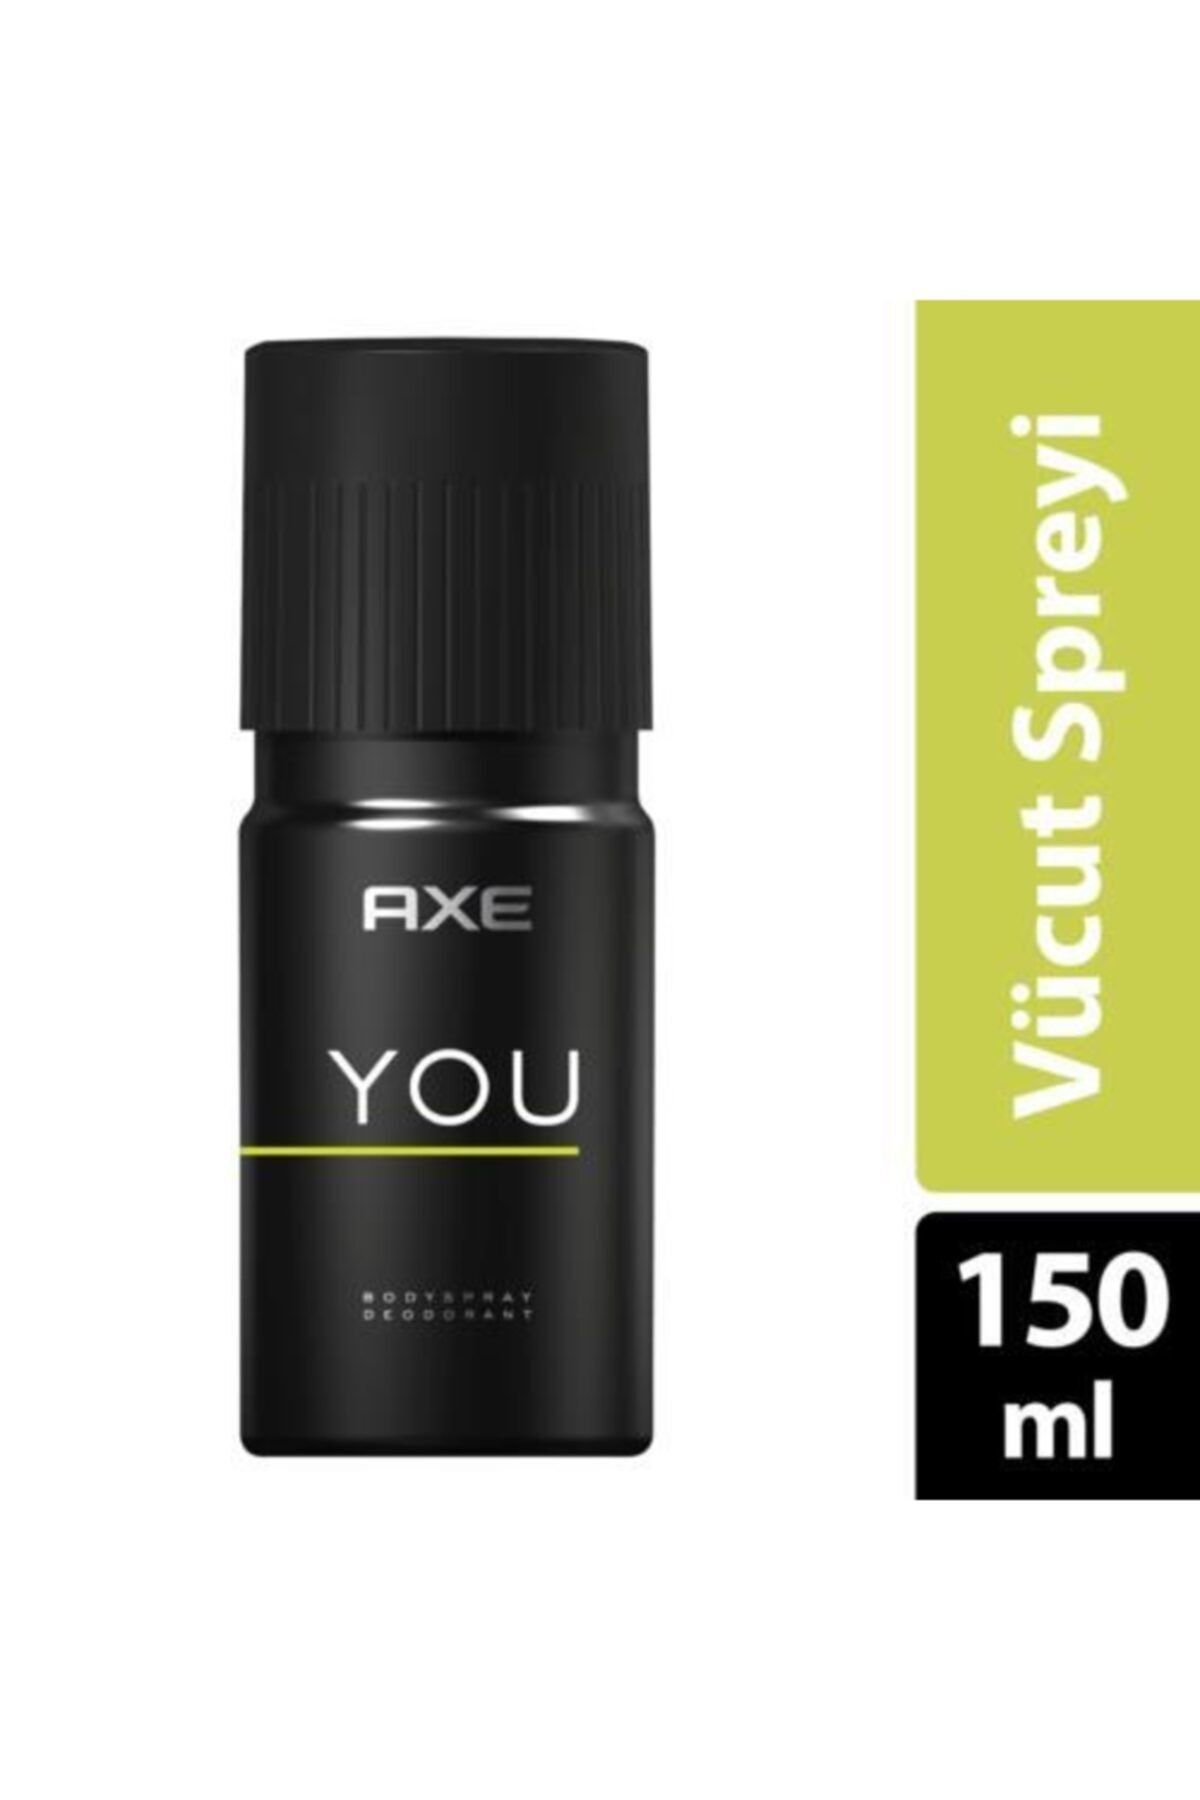 Axe You Refreshed Body Spray 150 Ml